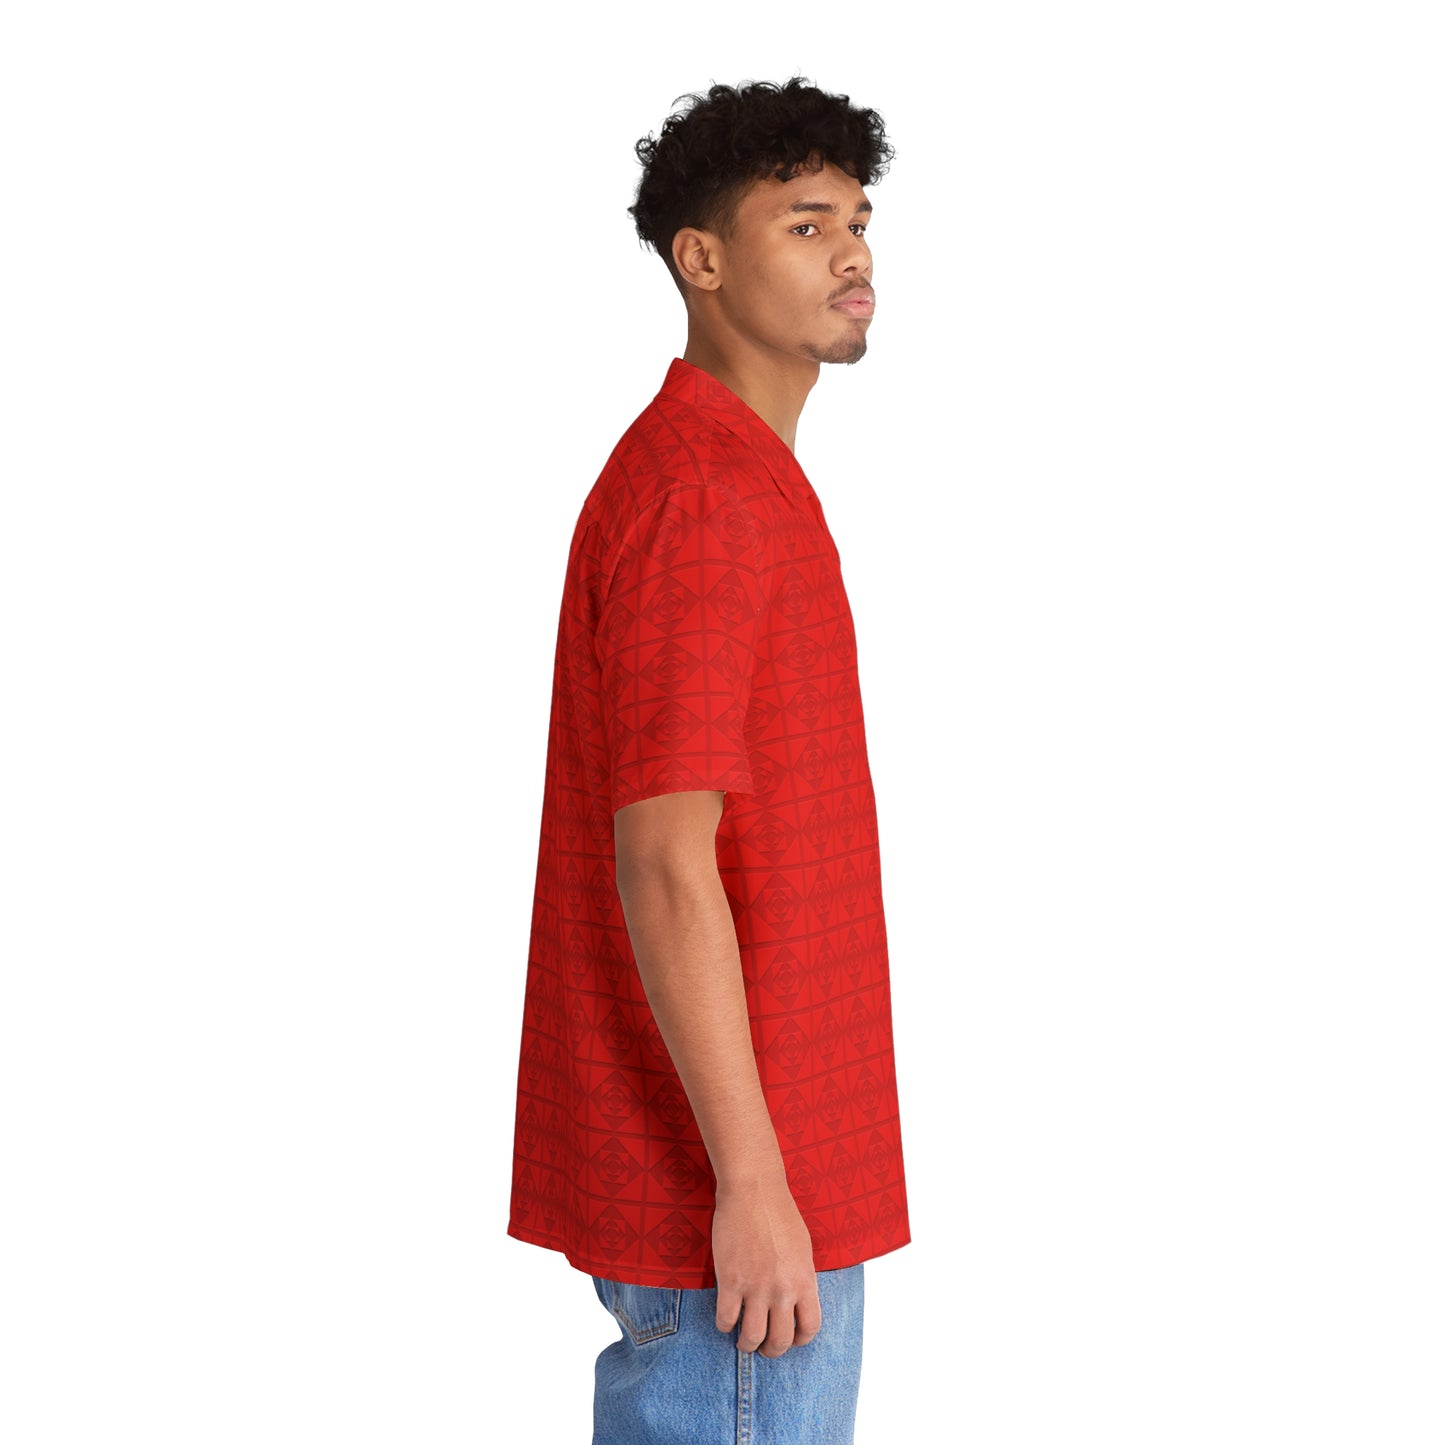 Embossed Geometric Pattern - Red - Men's Hawaiian Shirt